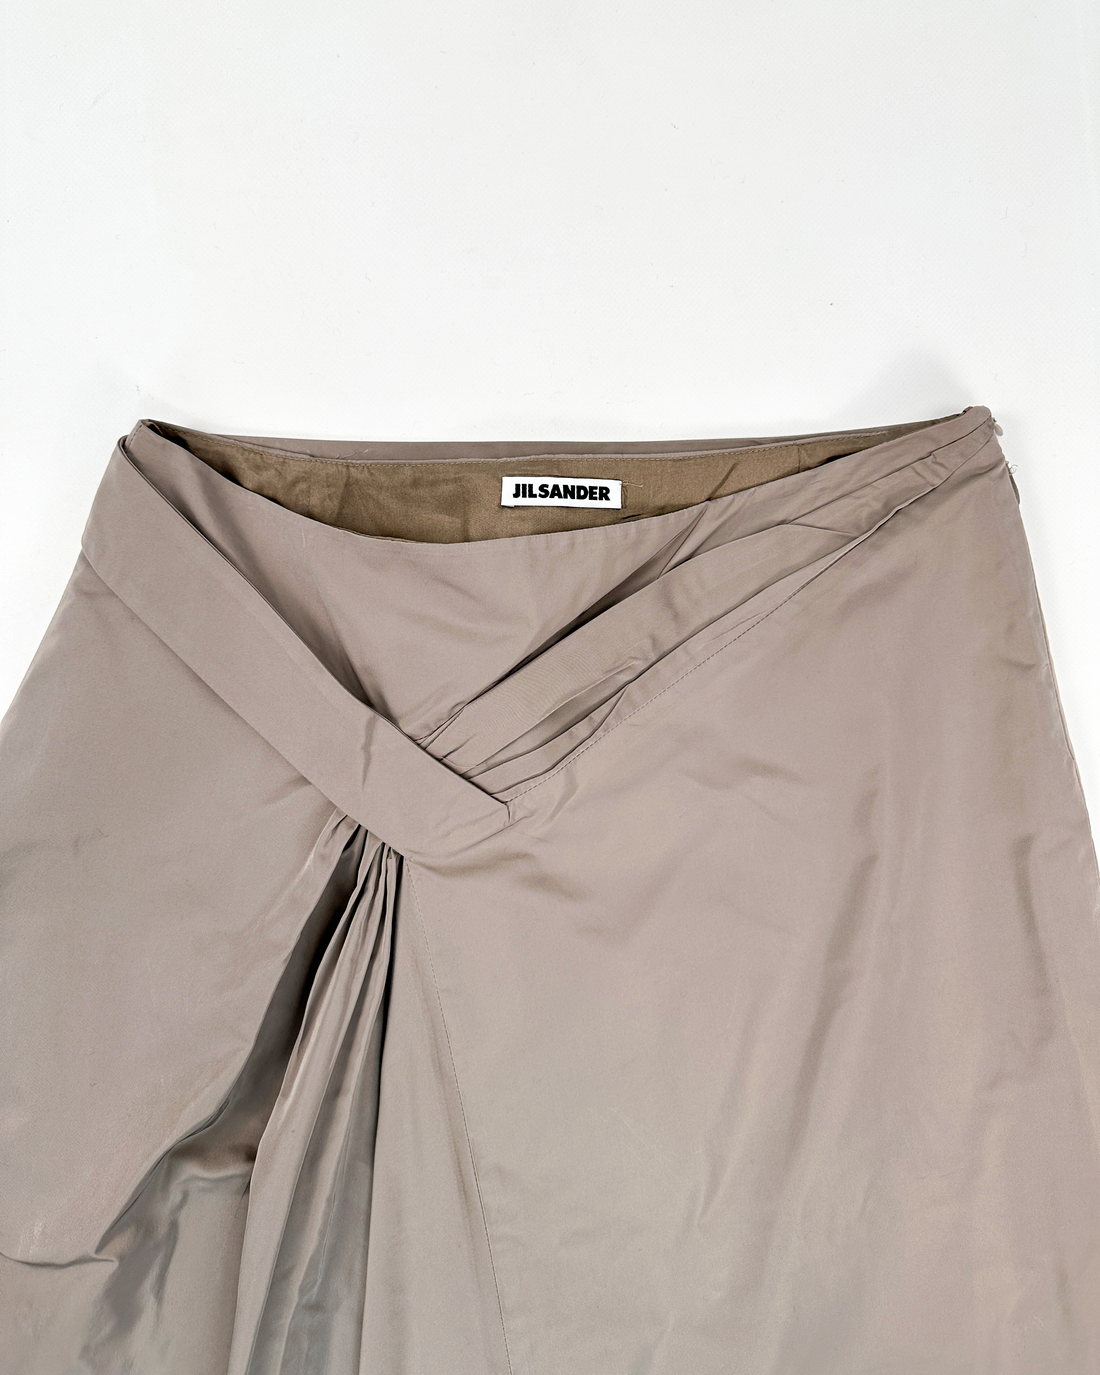 Jil Sander Pleated Grey Skirt 2000's